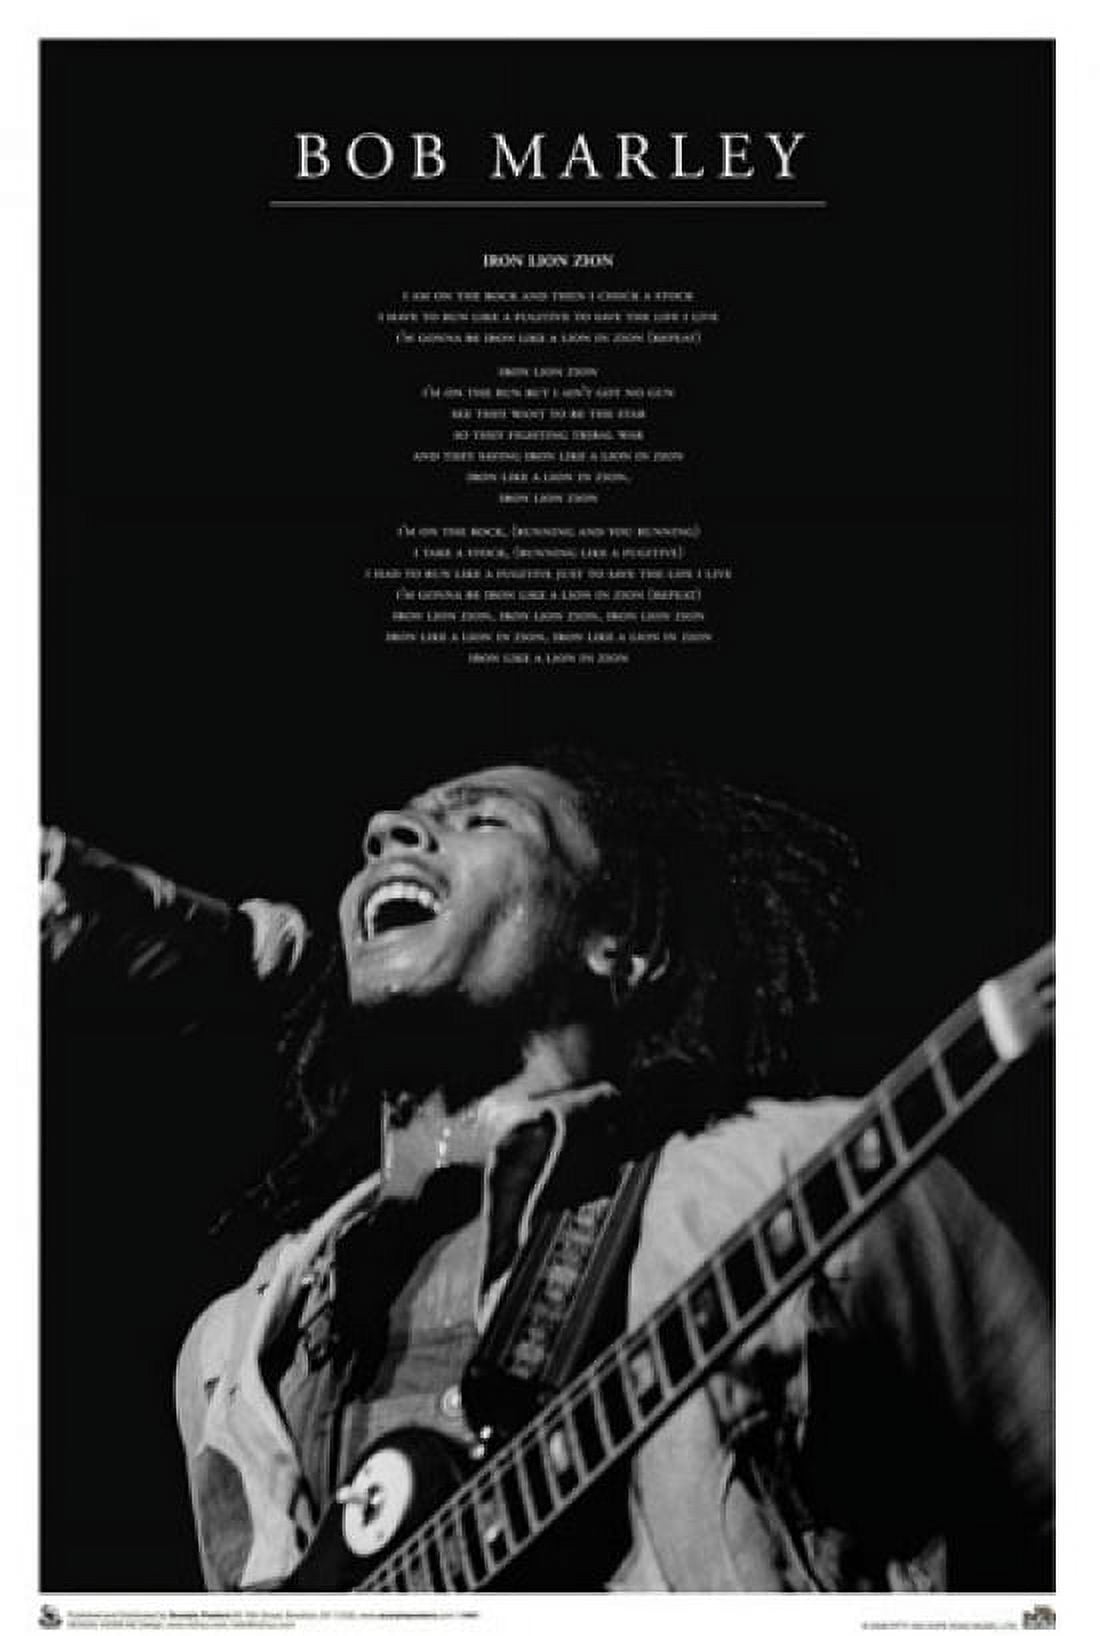 Bob Marley Lyrics Posters for Sale